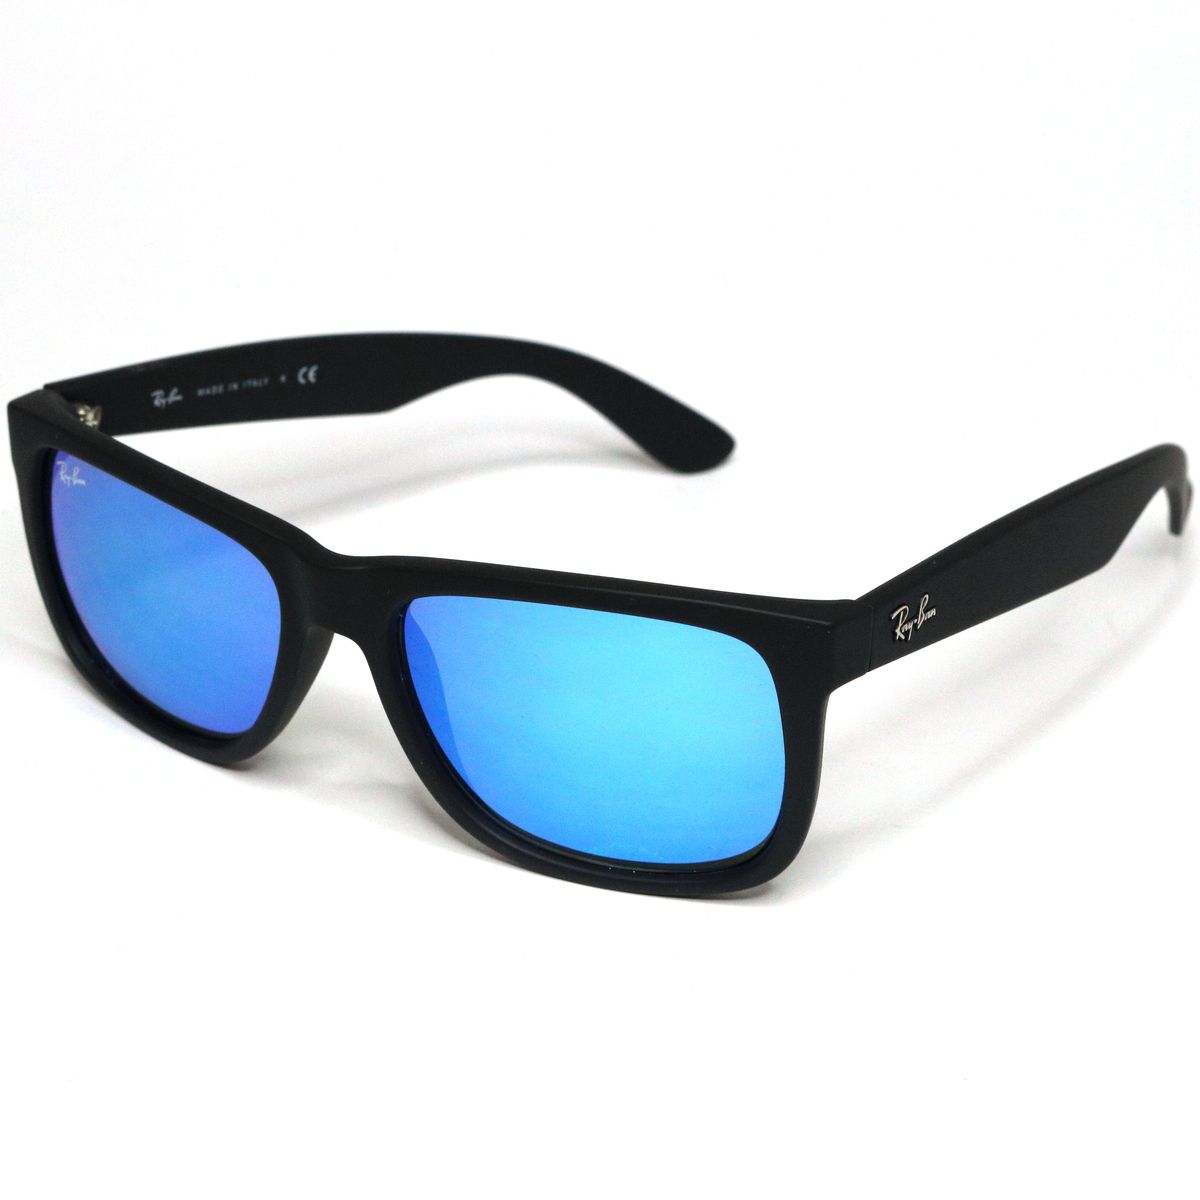 Justin Color Mix Sunglasses RB4165 622 55 - size 55